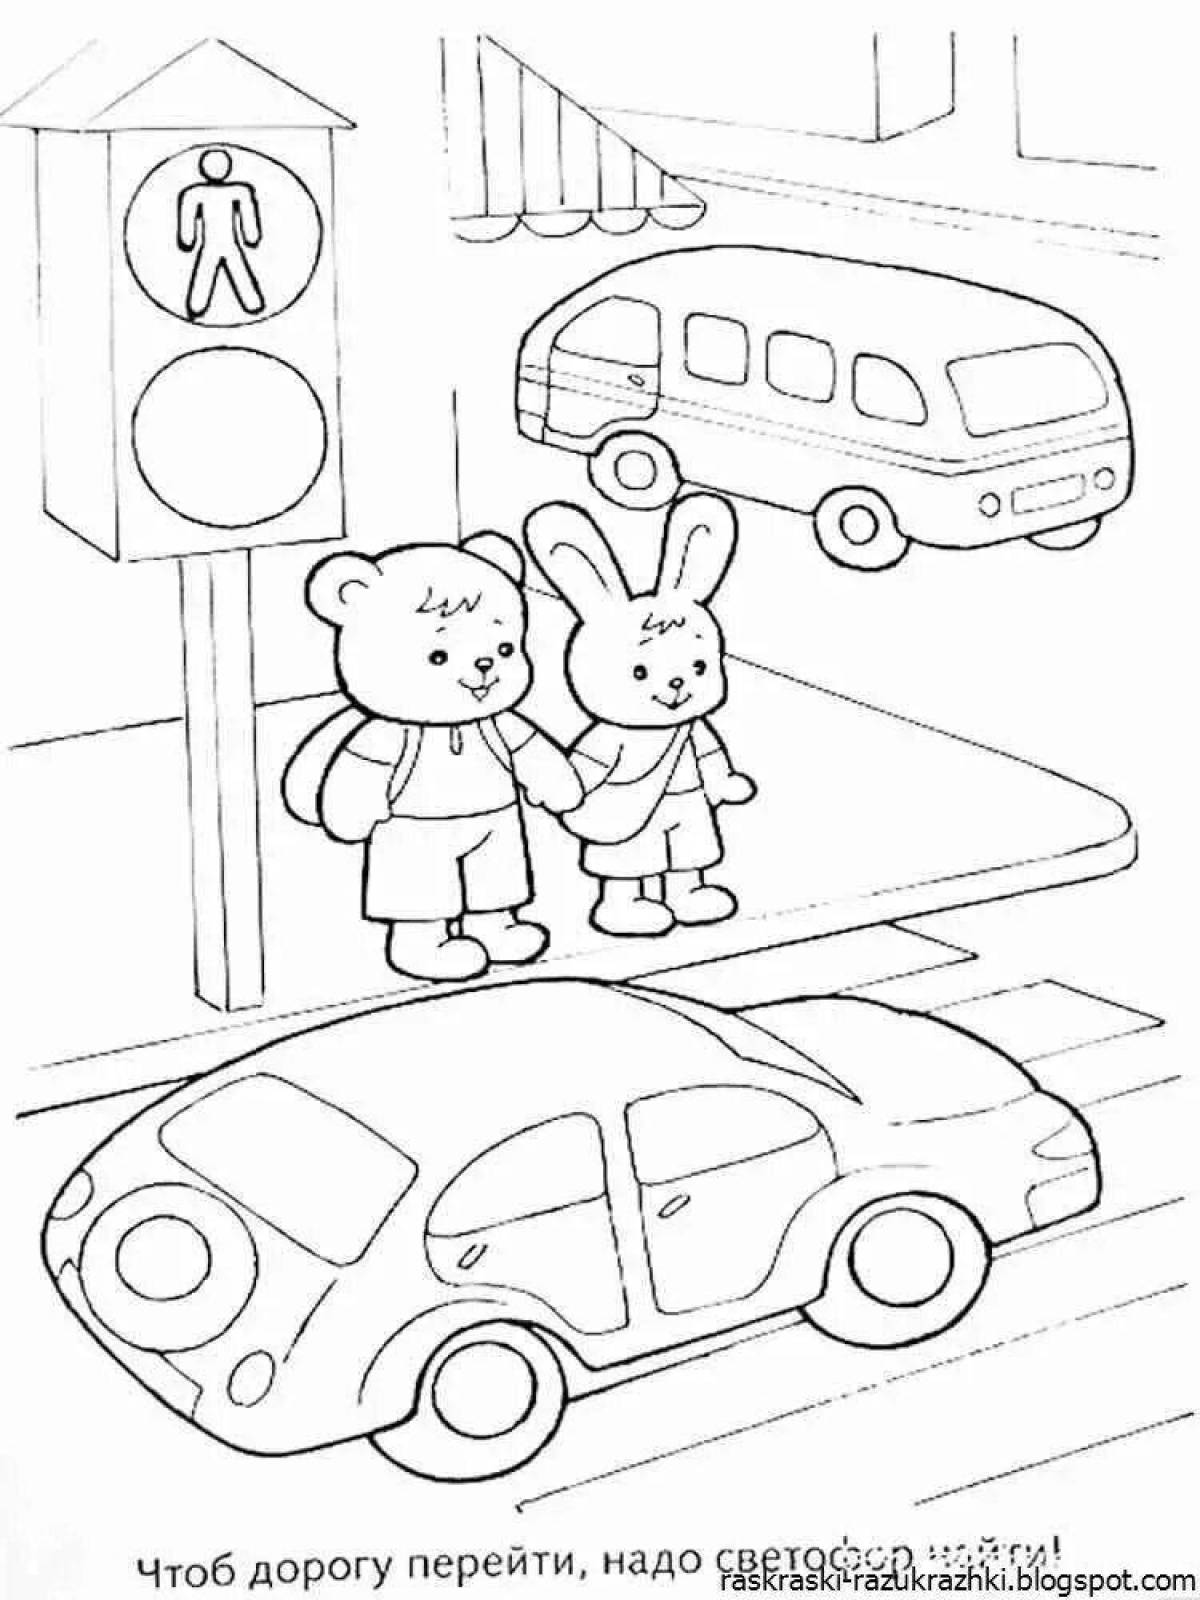 1st grade traffic rules fun coloring book